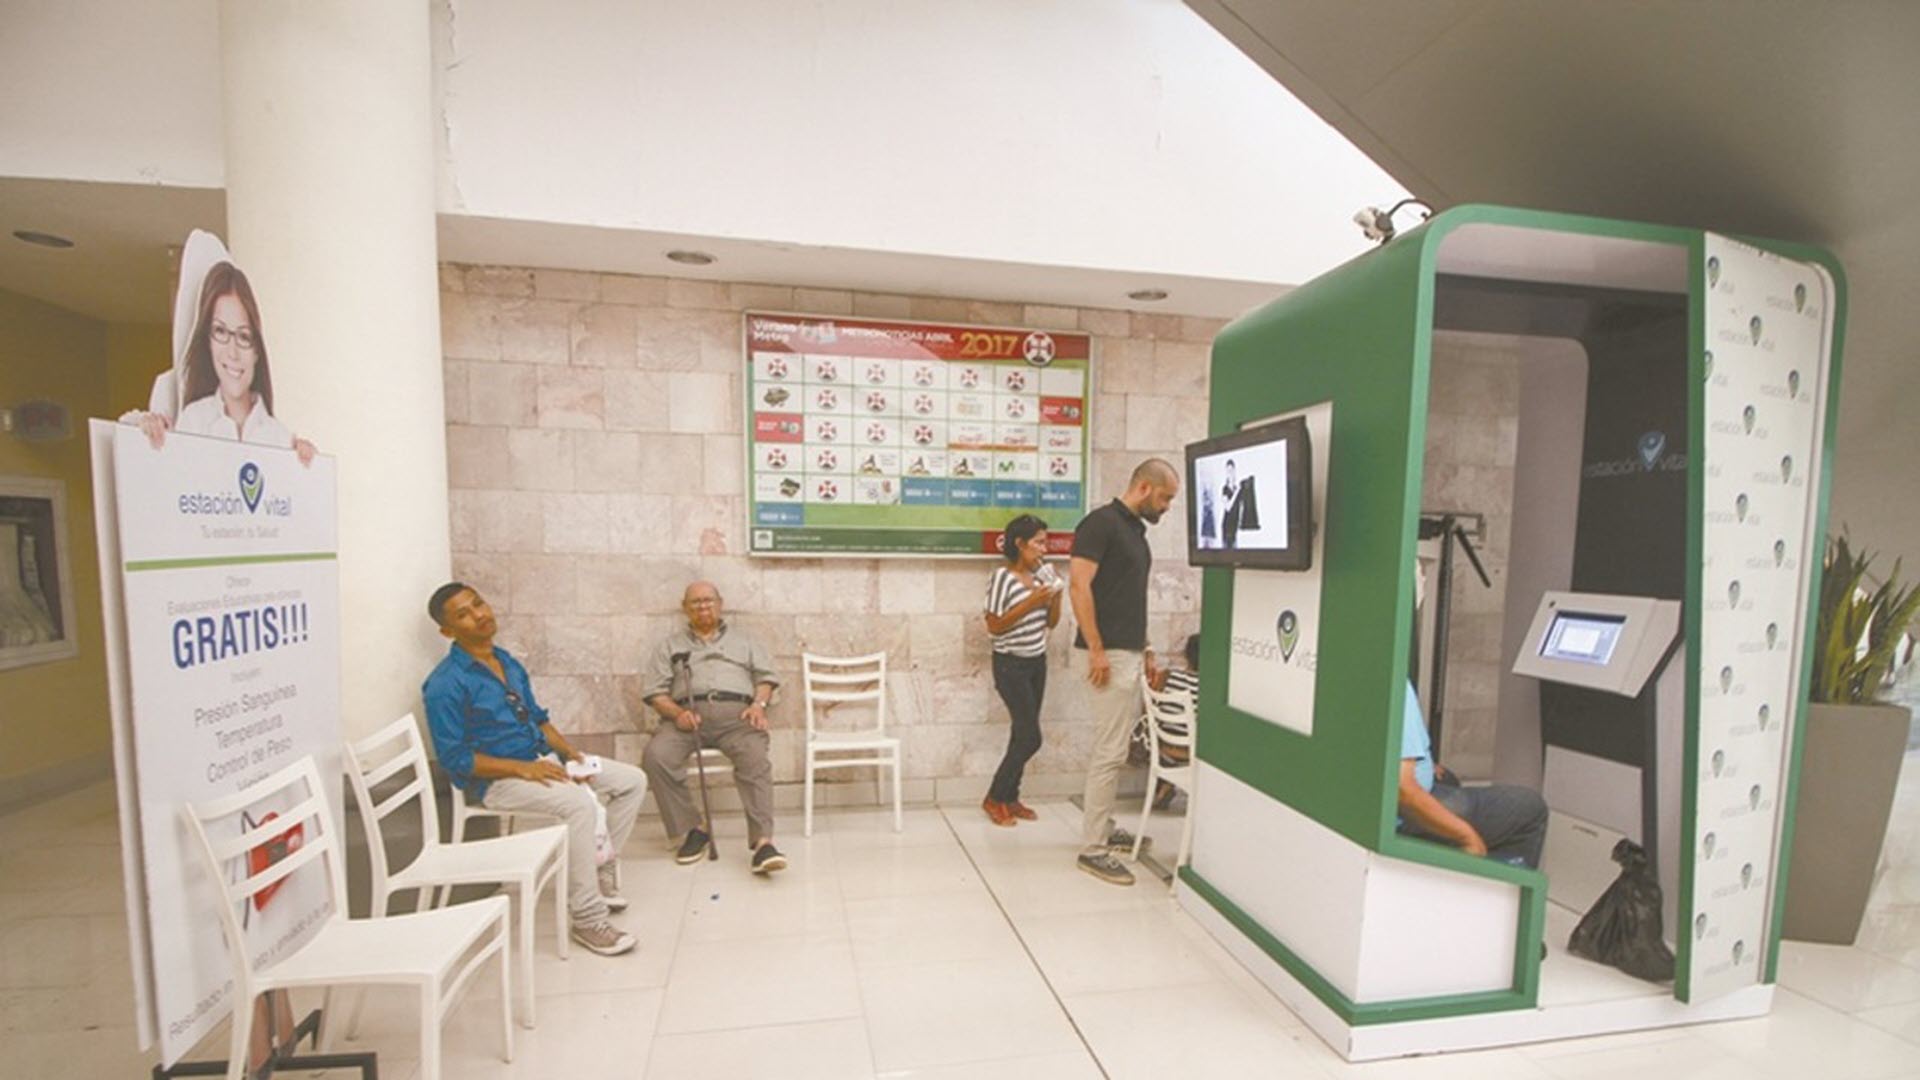 Health kiosk of Estación Vital installed in a mall in Nicaragua